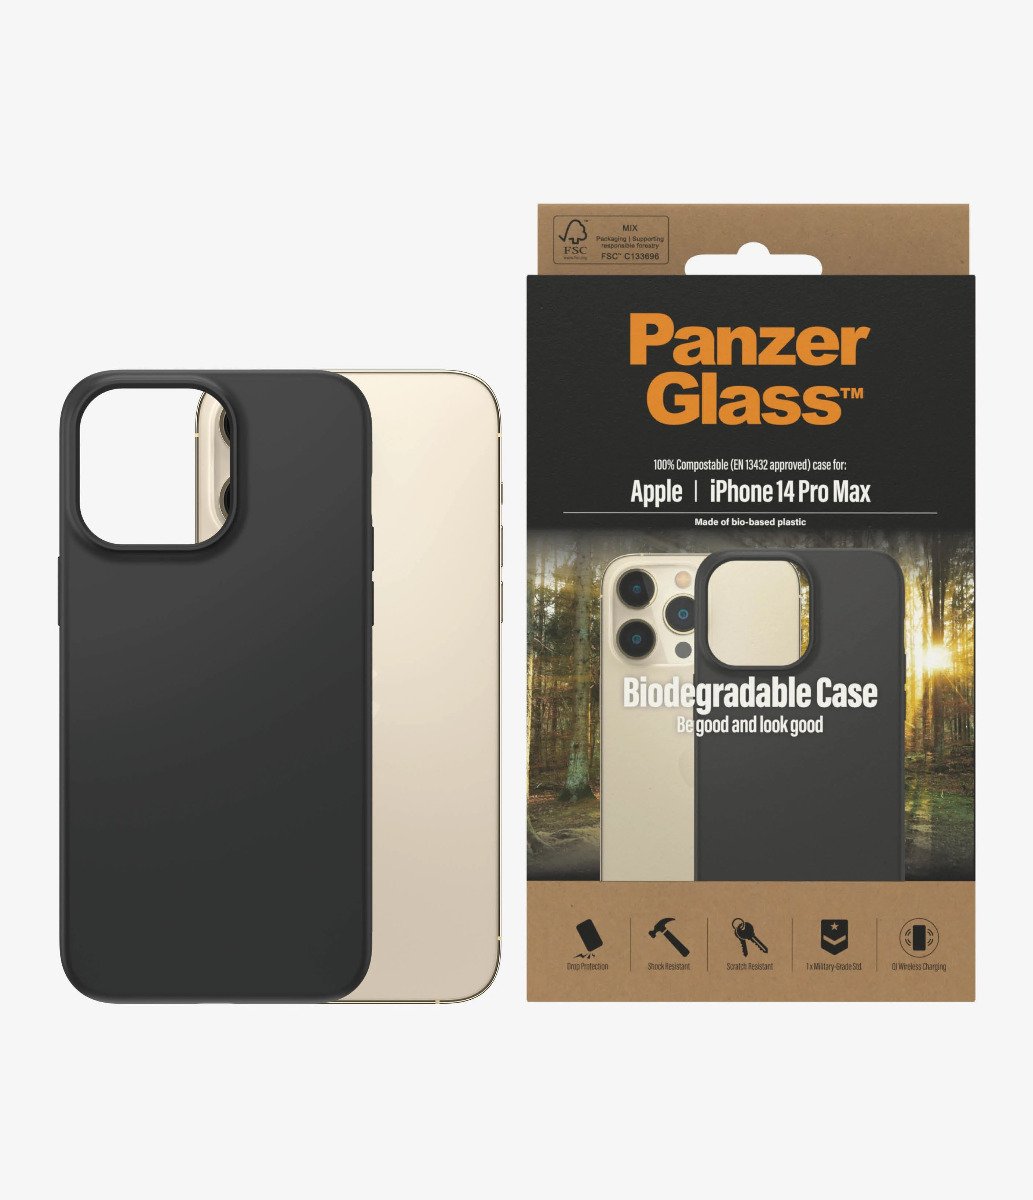 PanzerGlass Apple iPhone 14 Pro Max Biodegradable Case - Black